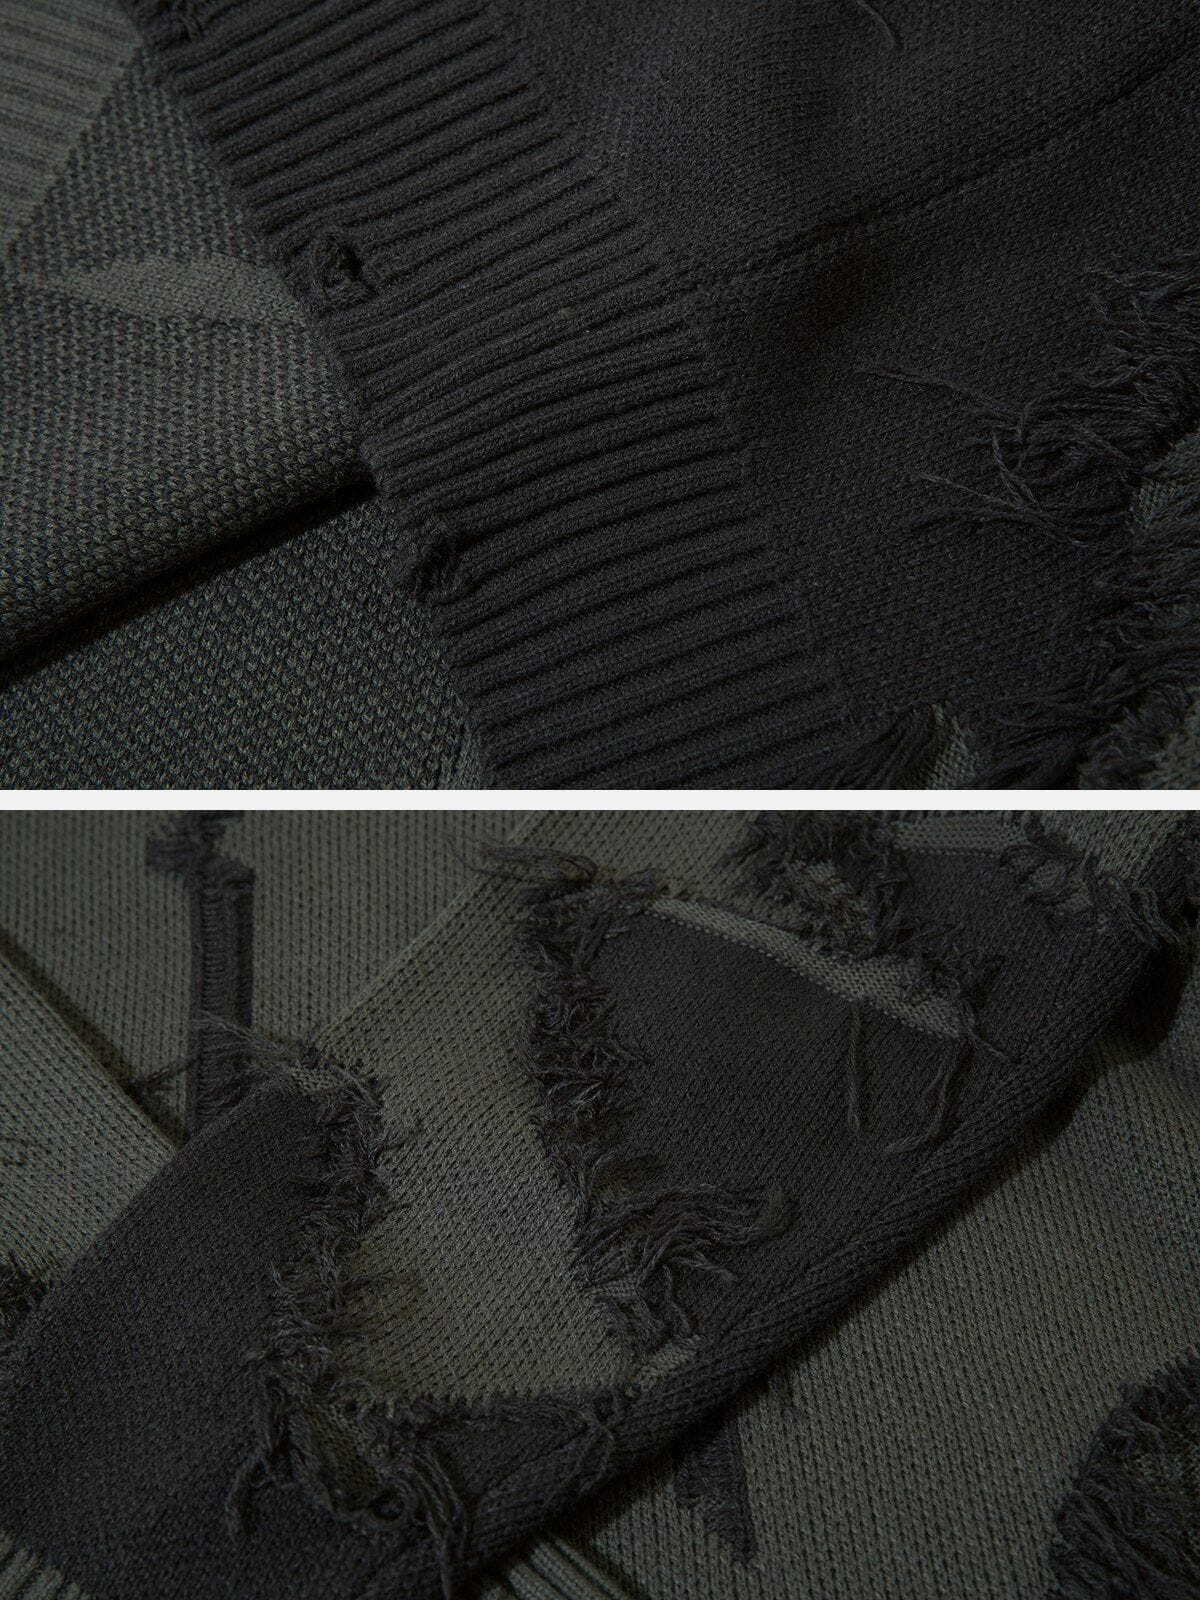 jacquard stitched pullover sleek urban edge 2415